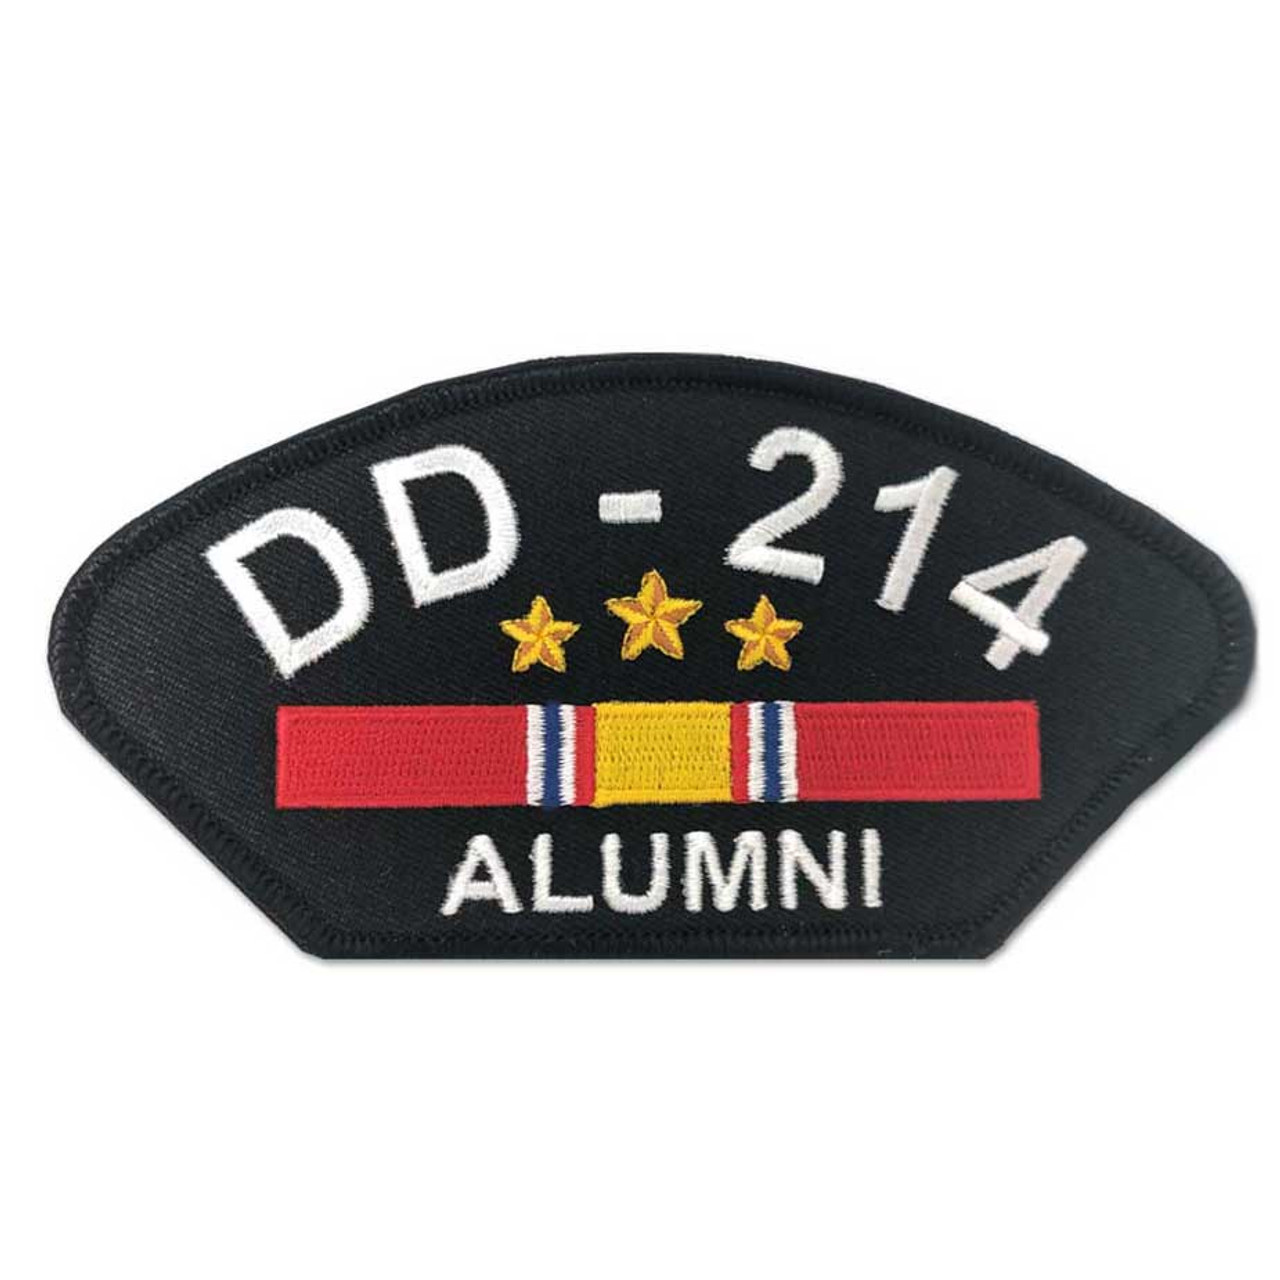 us veteran patch dd214 alumni and national service ribbon